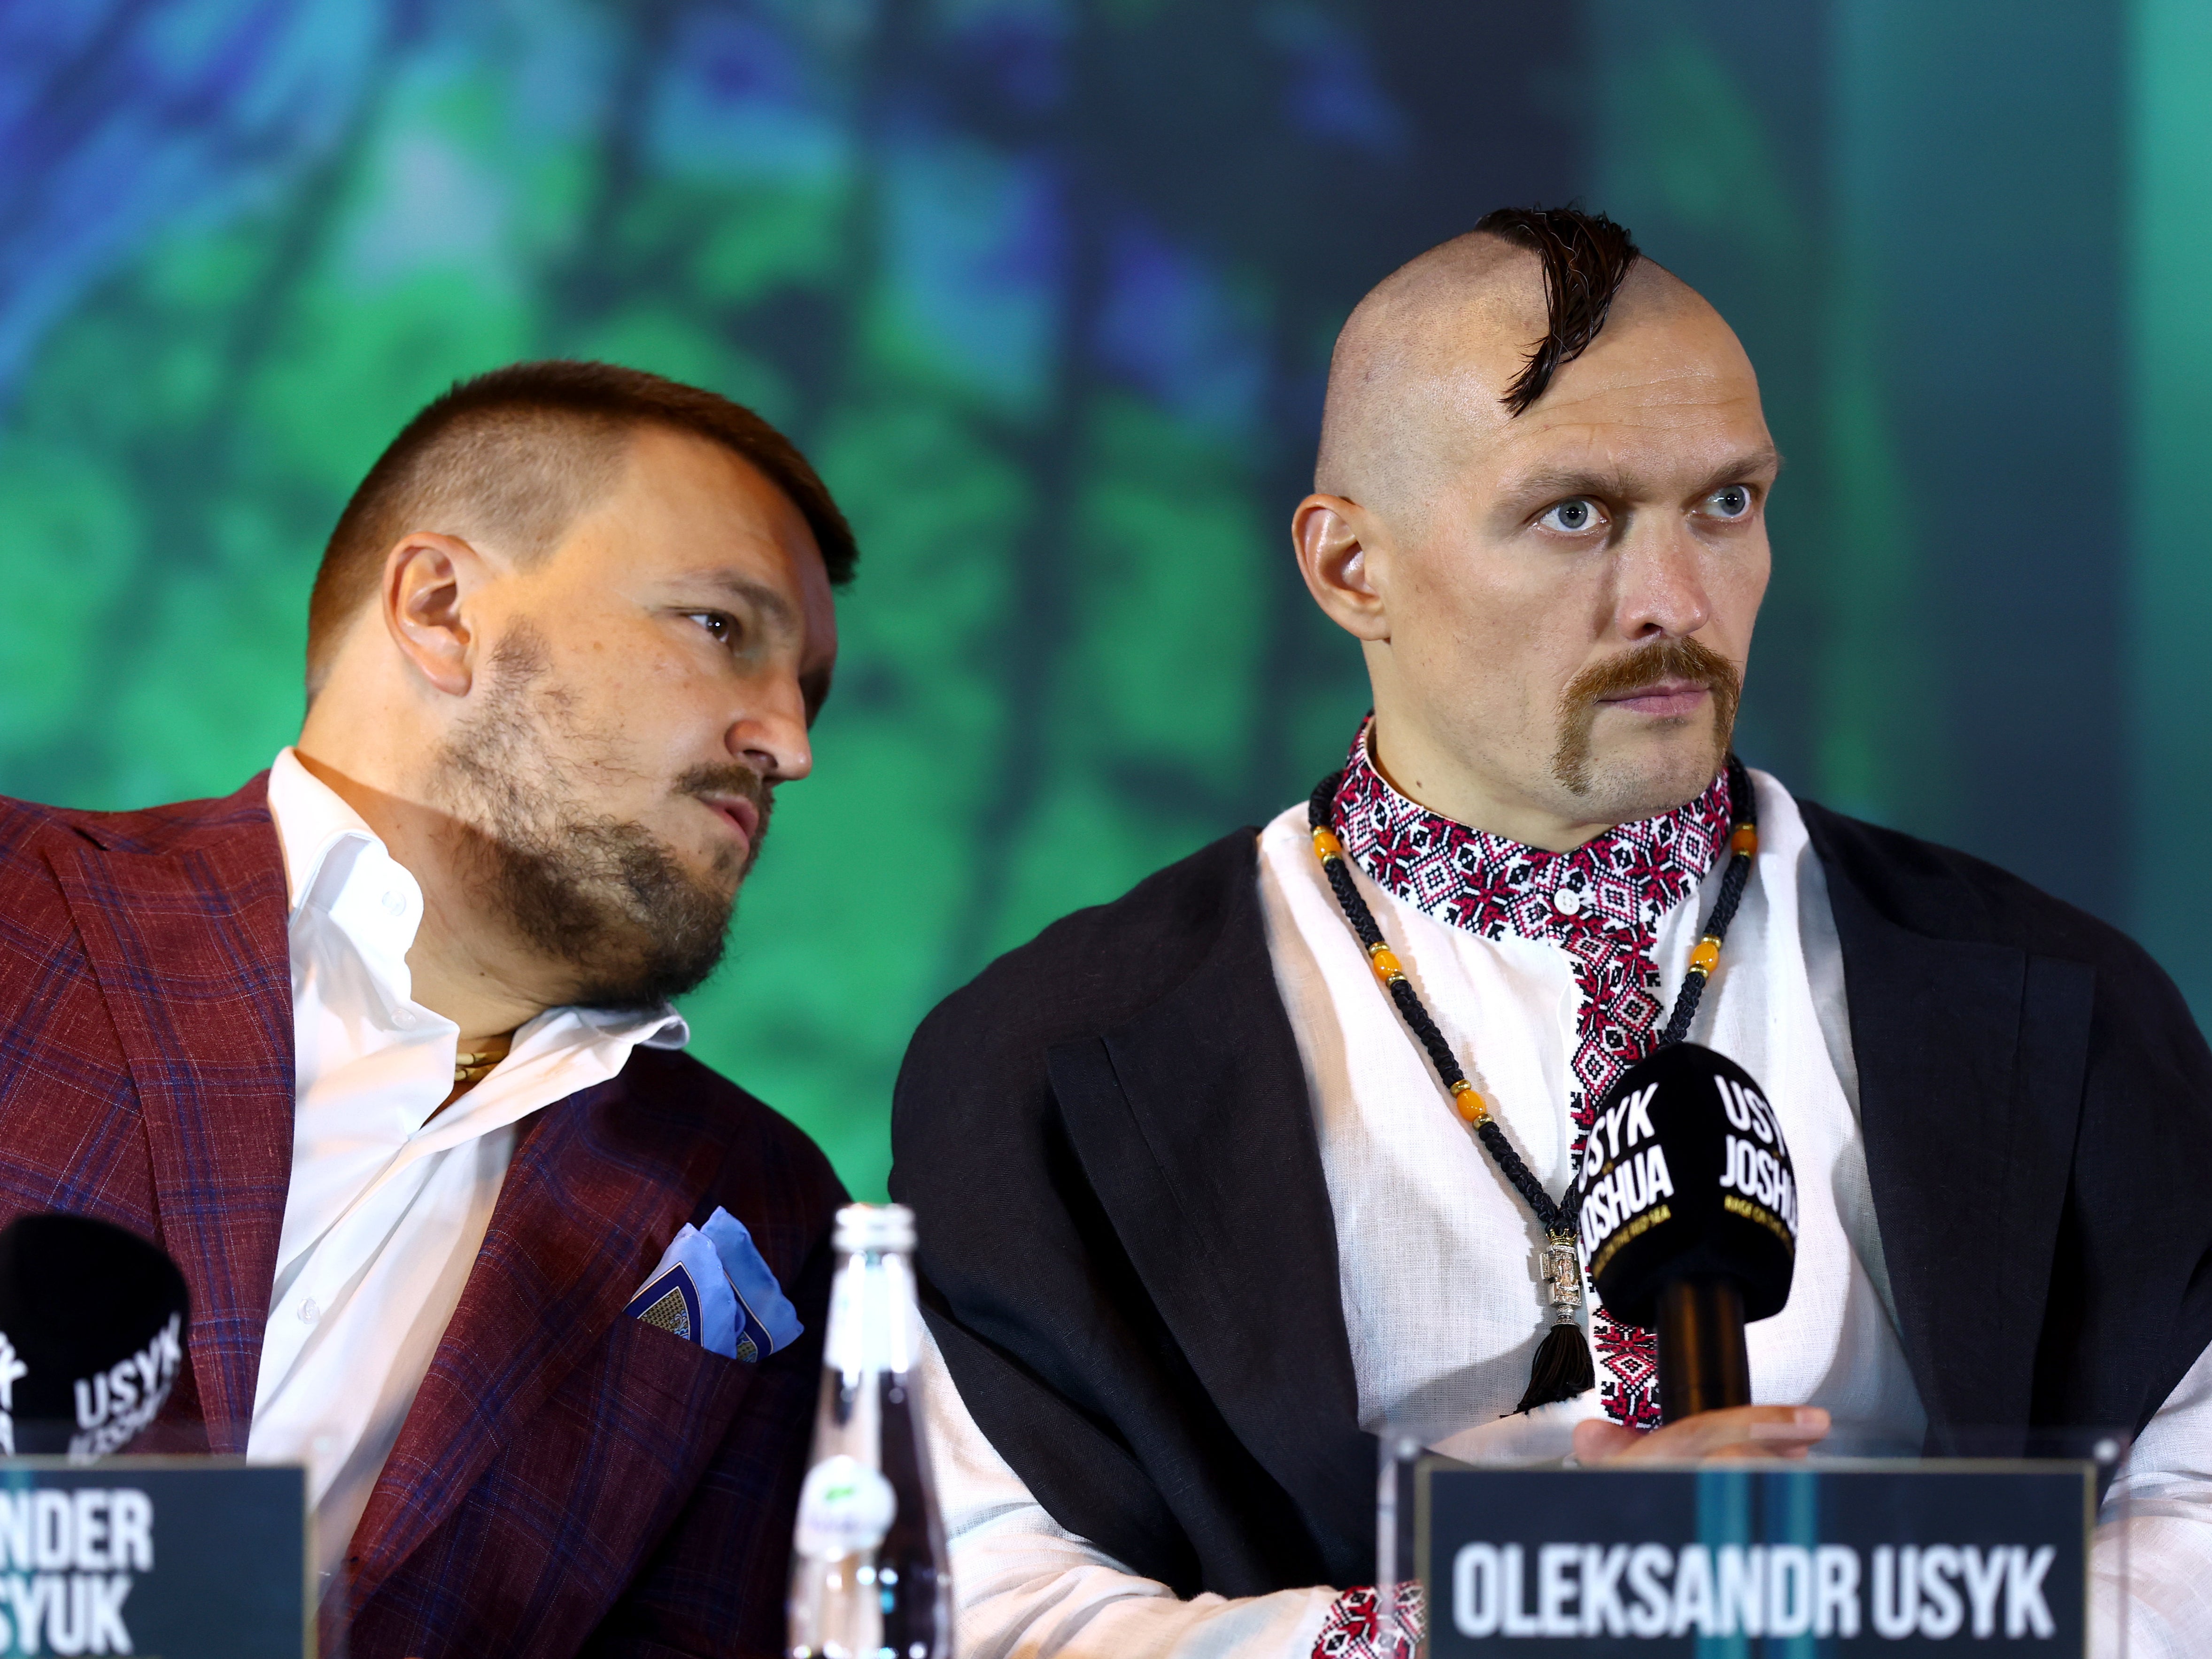 Oleksandr Usyk (right) with his promoter Alex Krassyuk